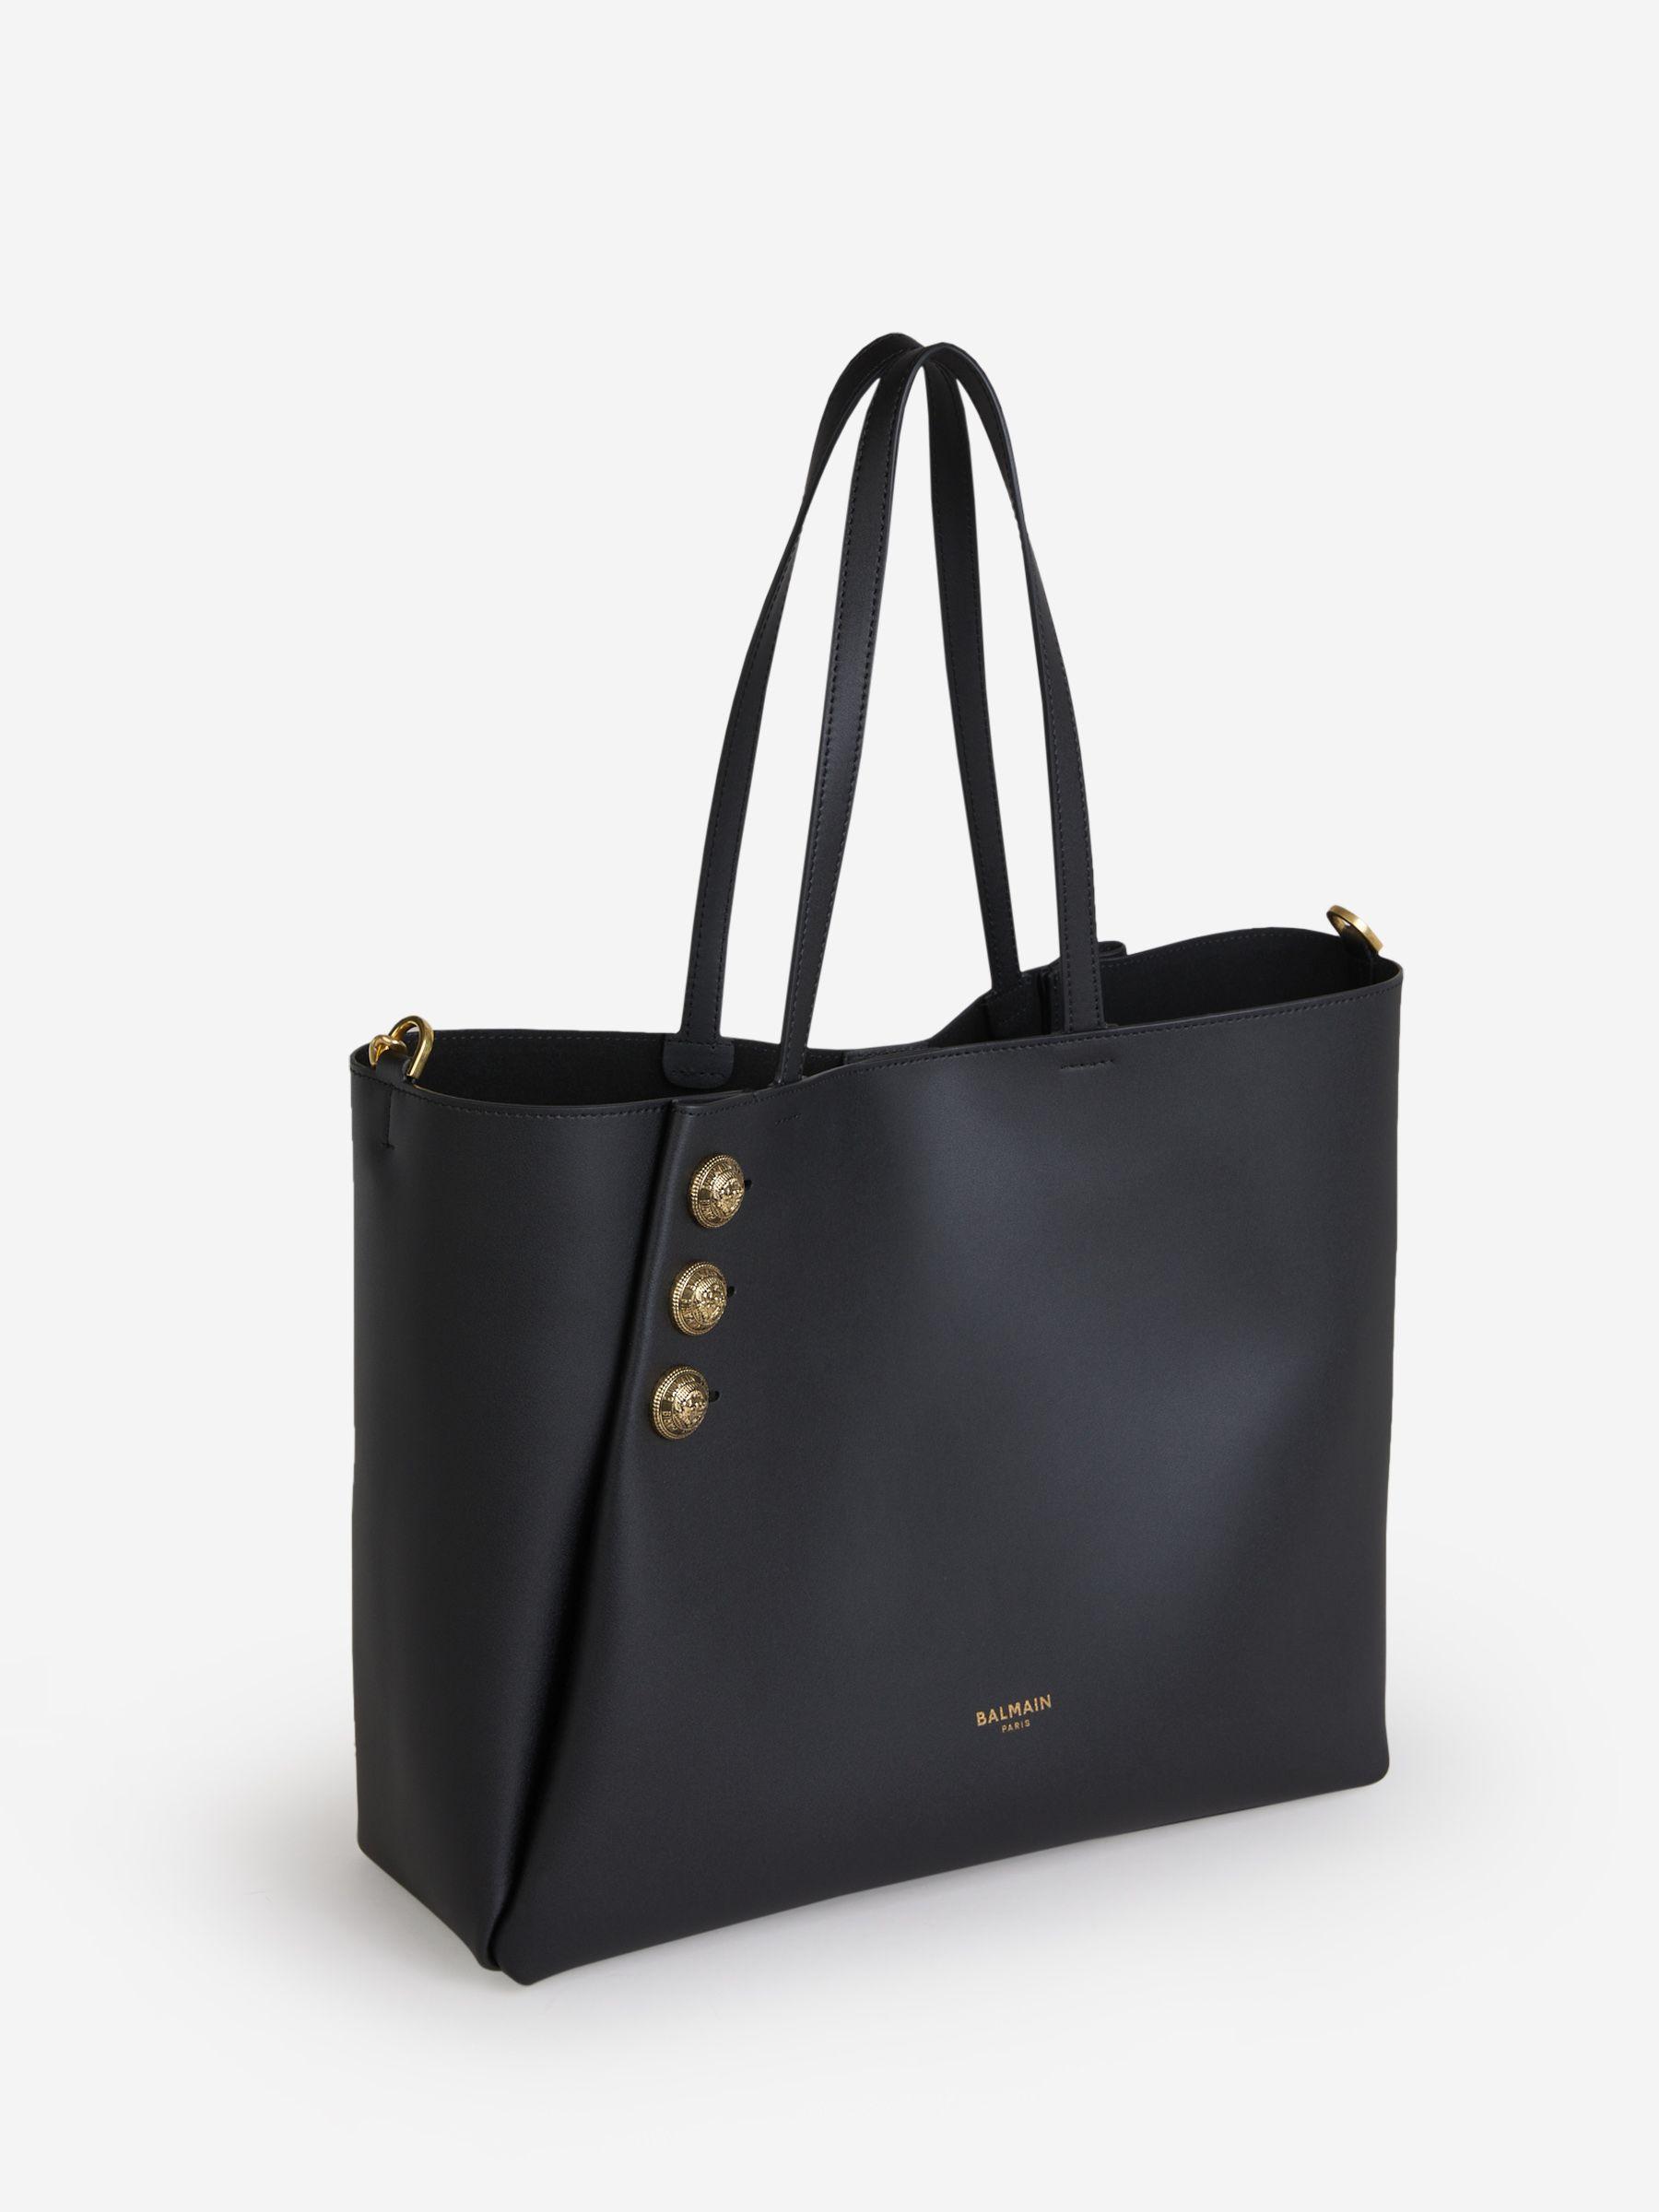 Balmain Leather Emblème Tote Bag in Black | Lyst